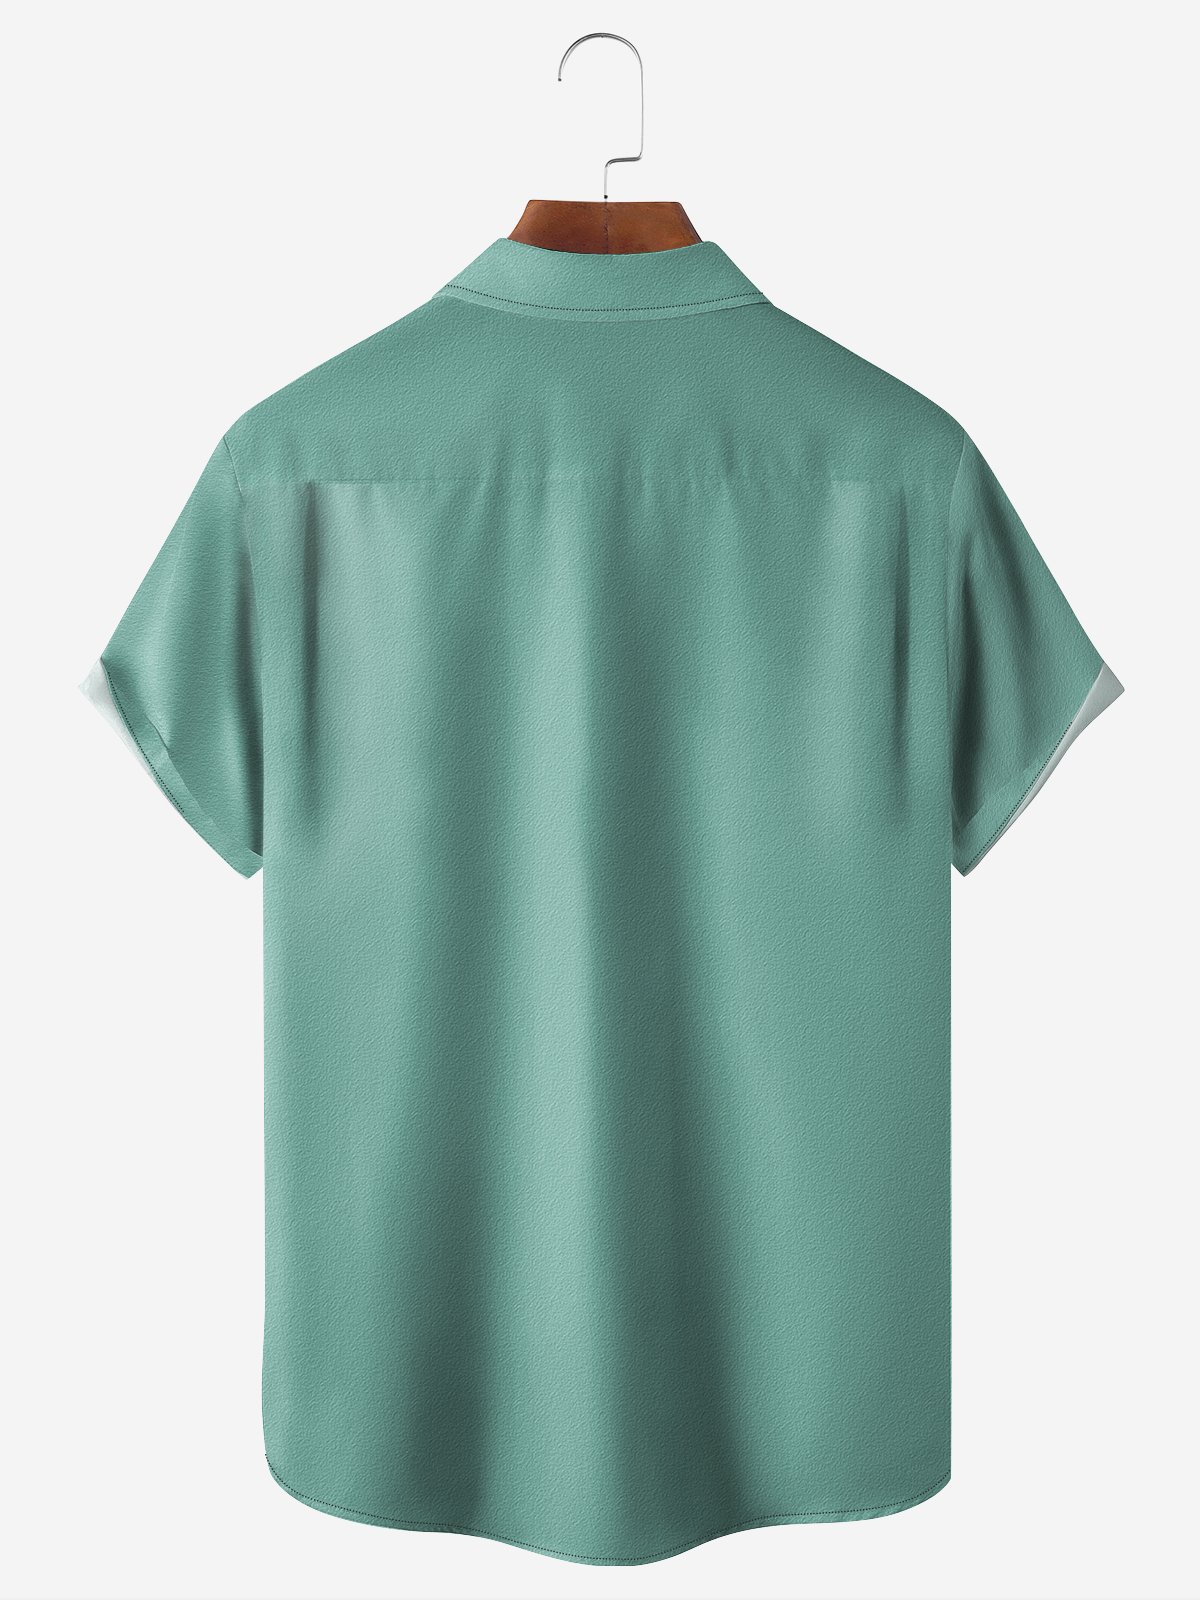 Hardaddy Cartoon Chest Pocket Short Sleeve Bowling Shirt